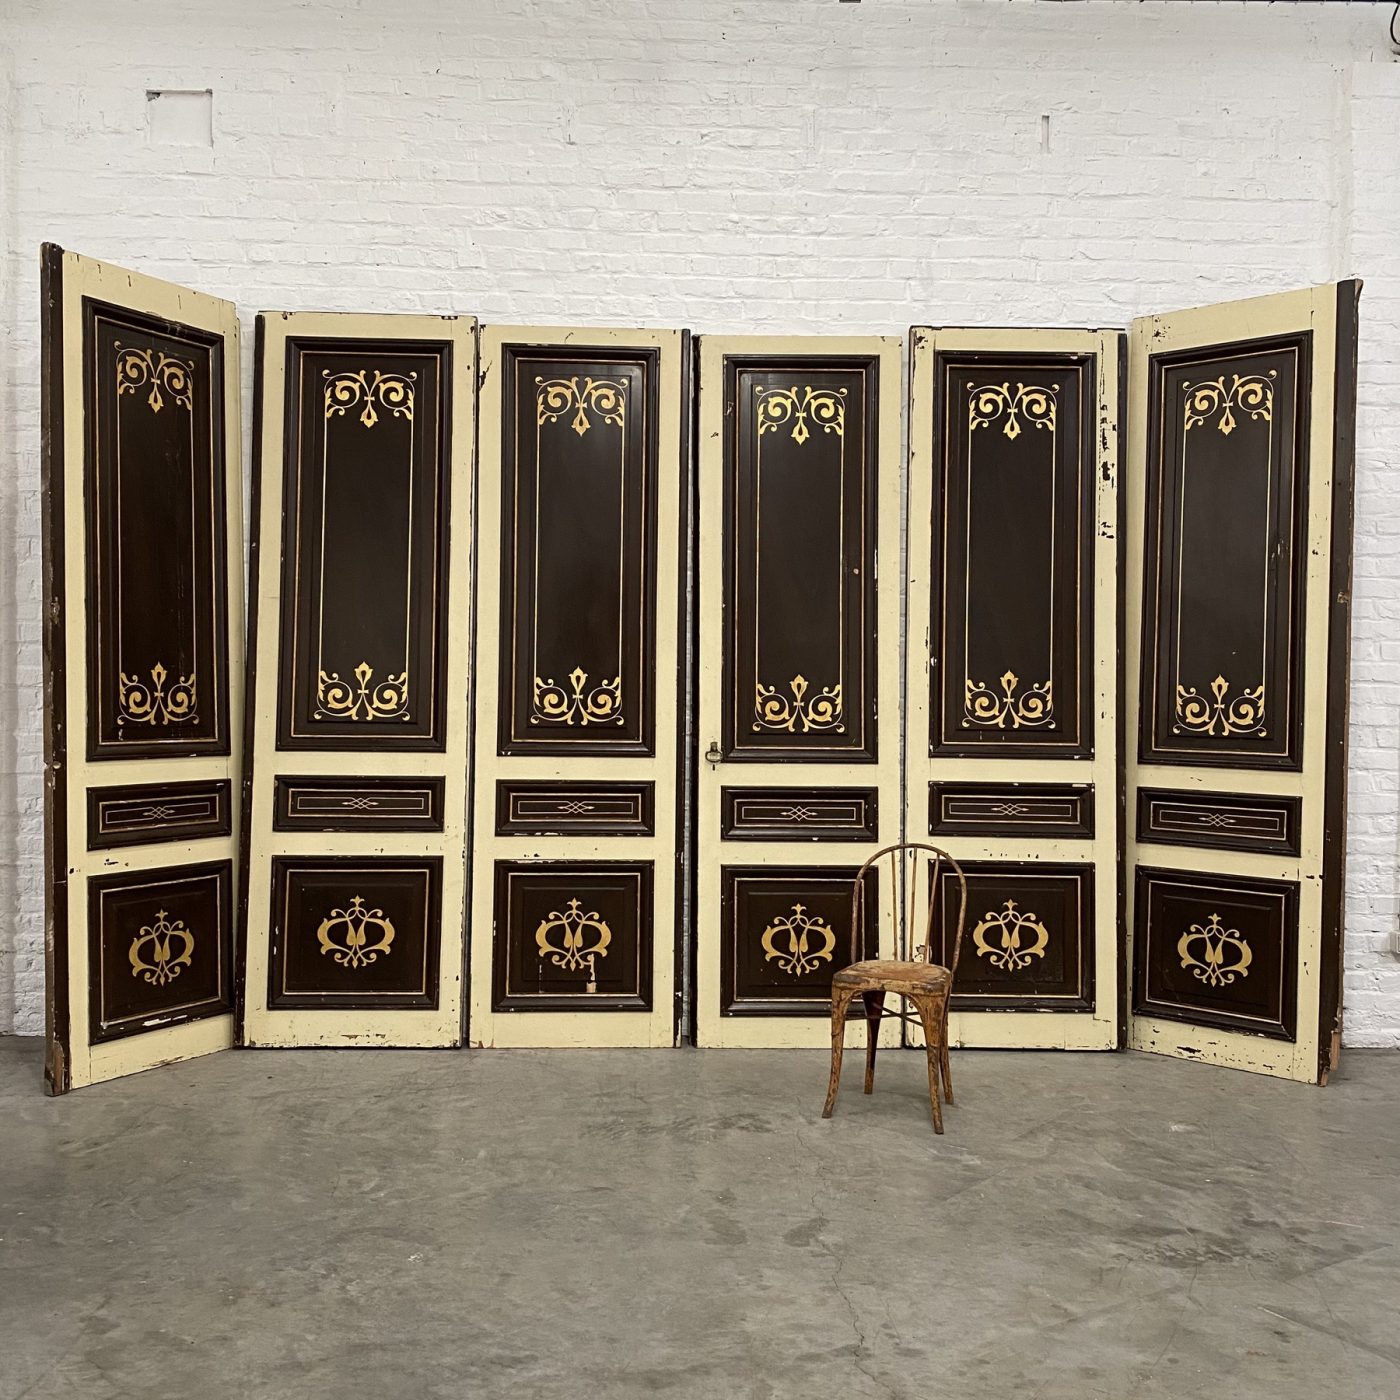 objet-vagabond-painted-doors0000